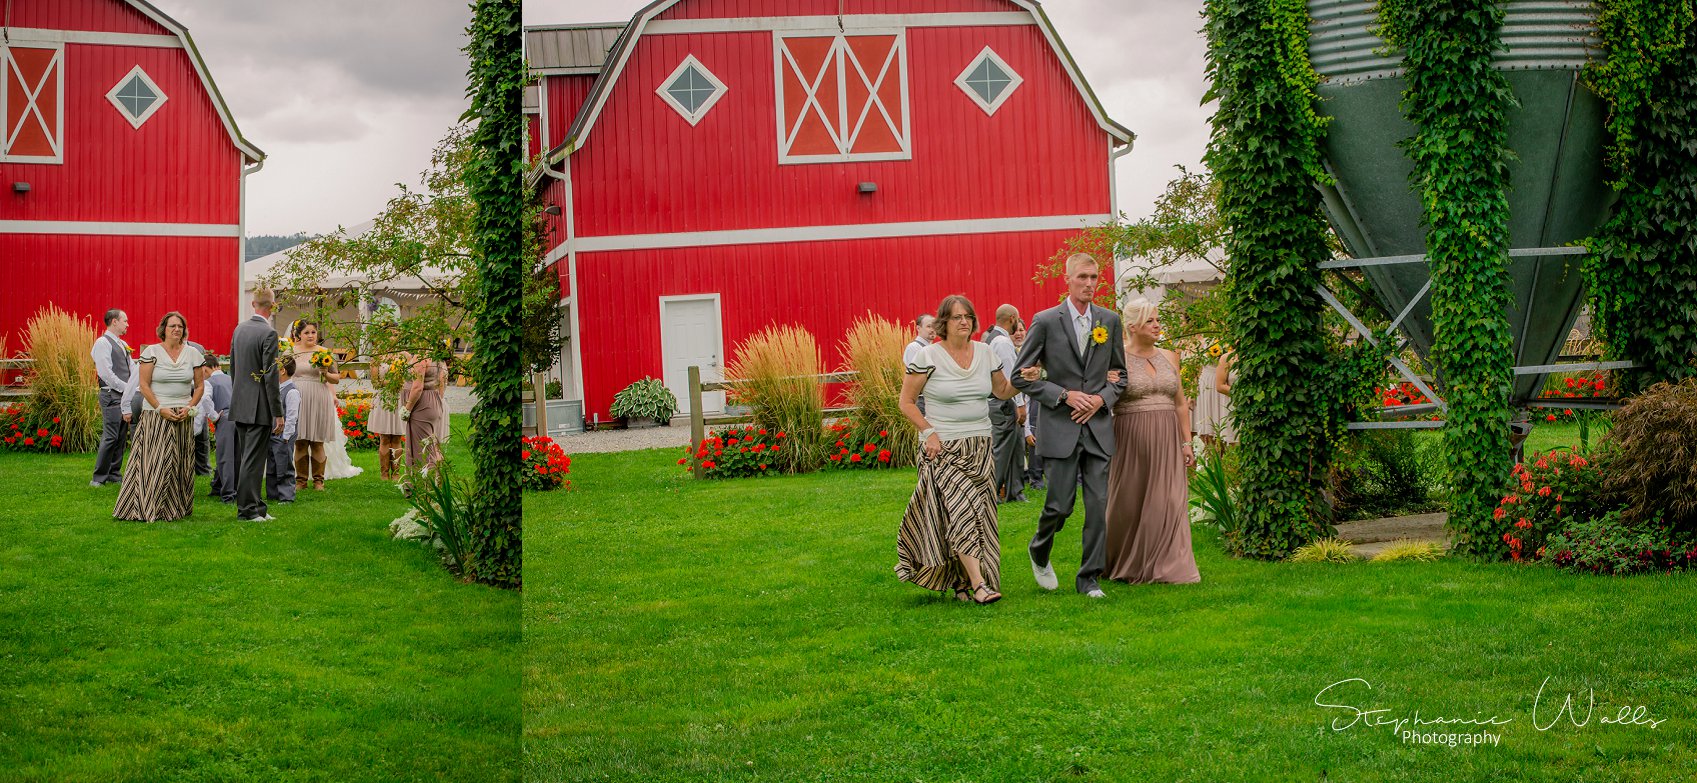 Kimble Wedding 021 Marlena & Allans | Snohomish Red Barn Events (Stocker Farms) | Snohomish, Wa Wedding Photographer